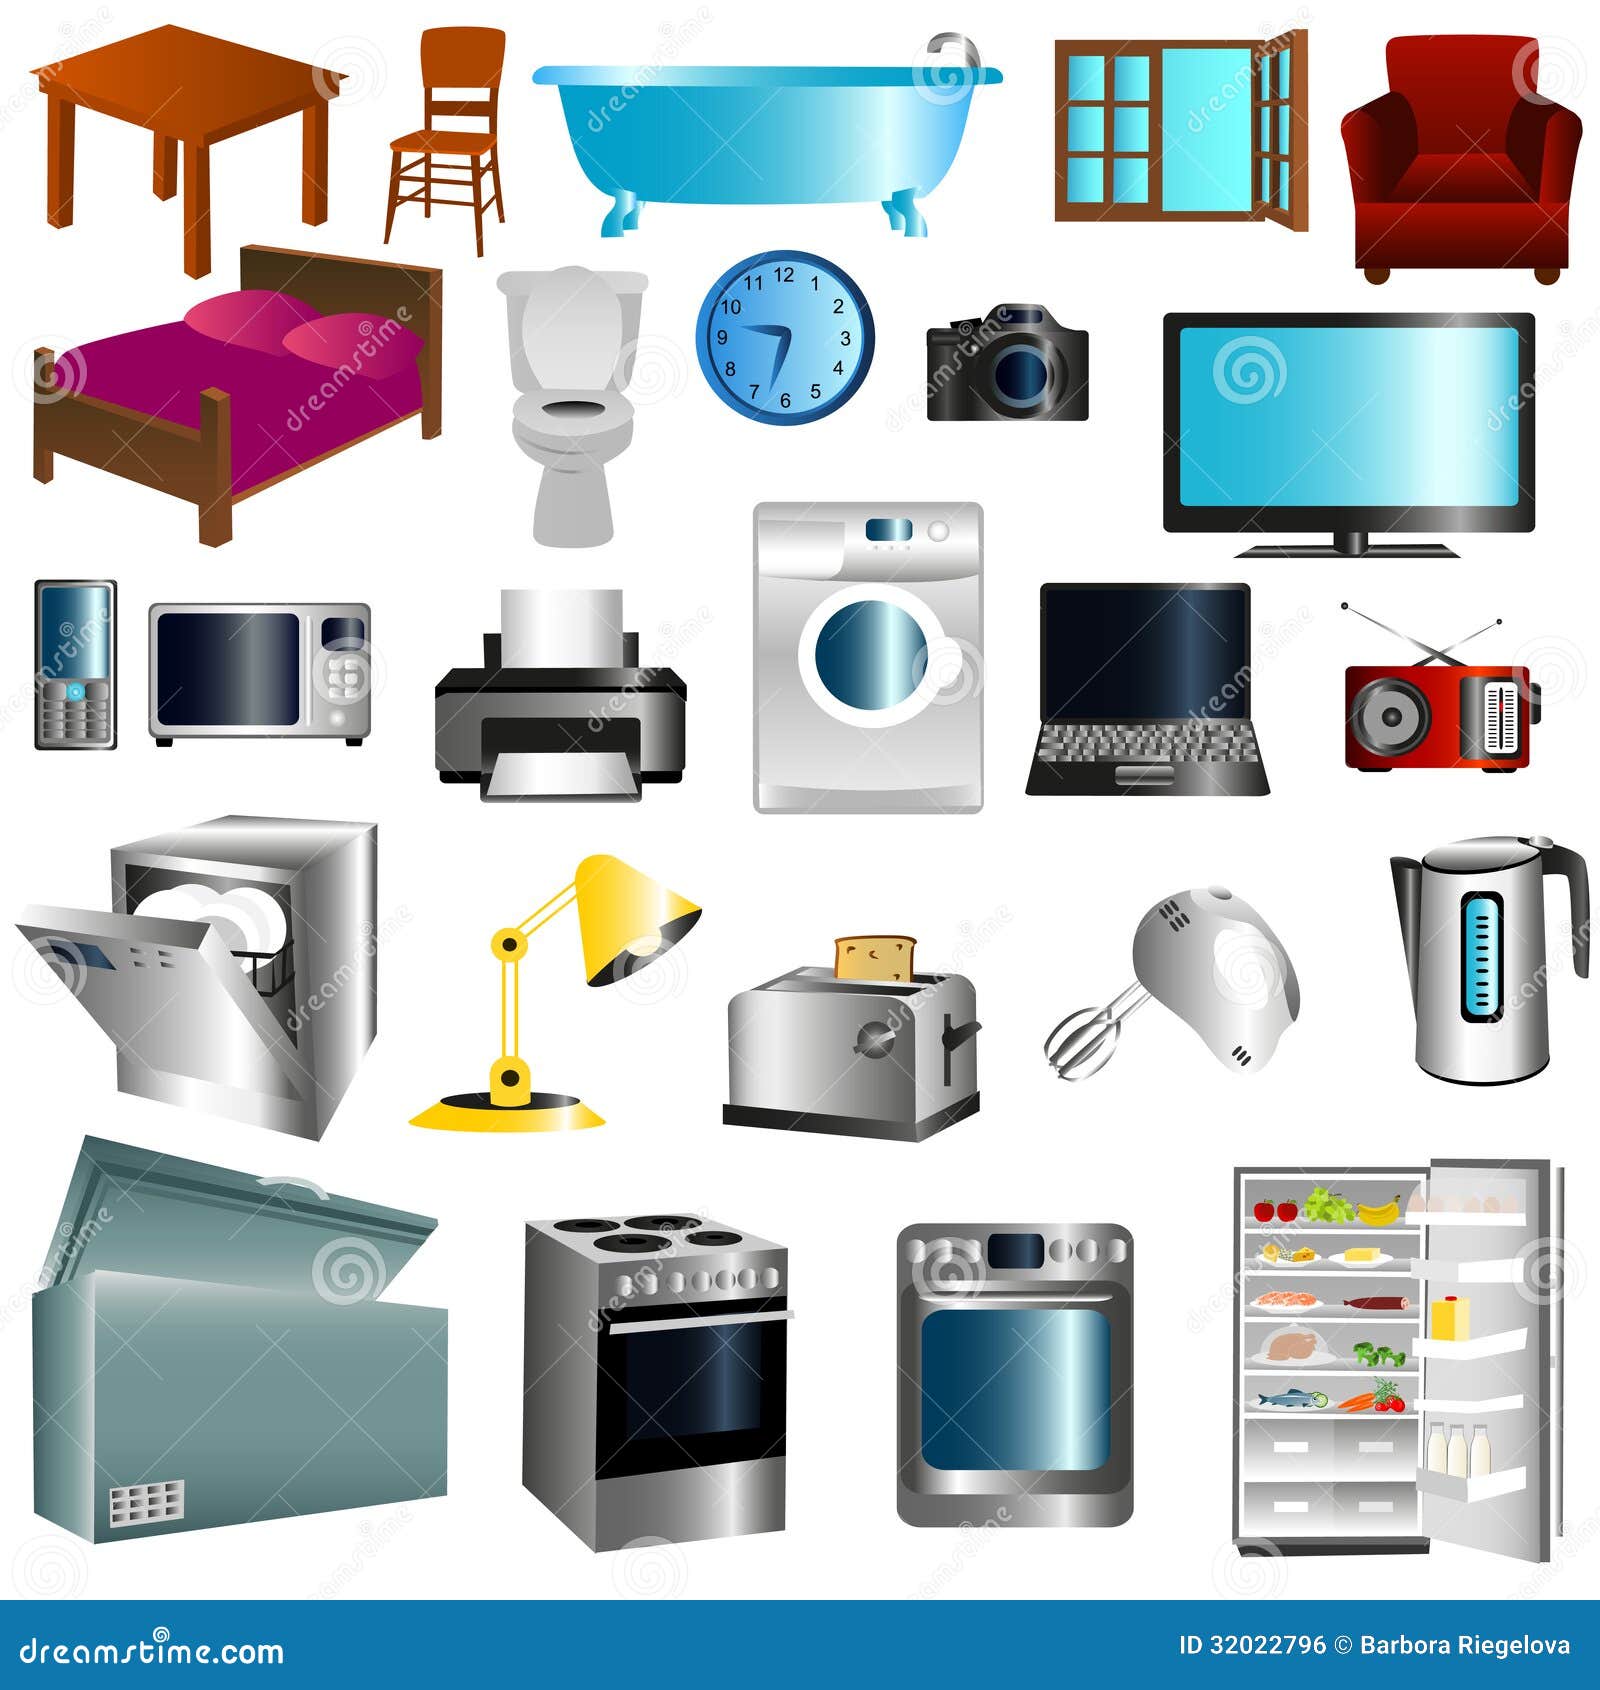 home appliances clipart free - photo #9